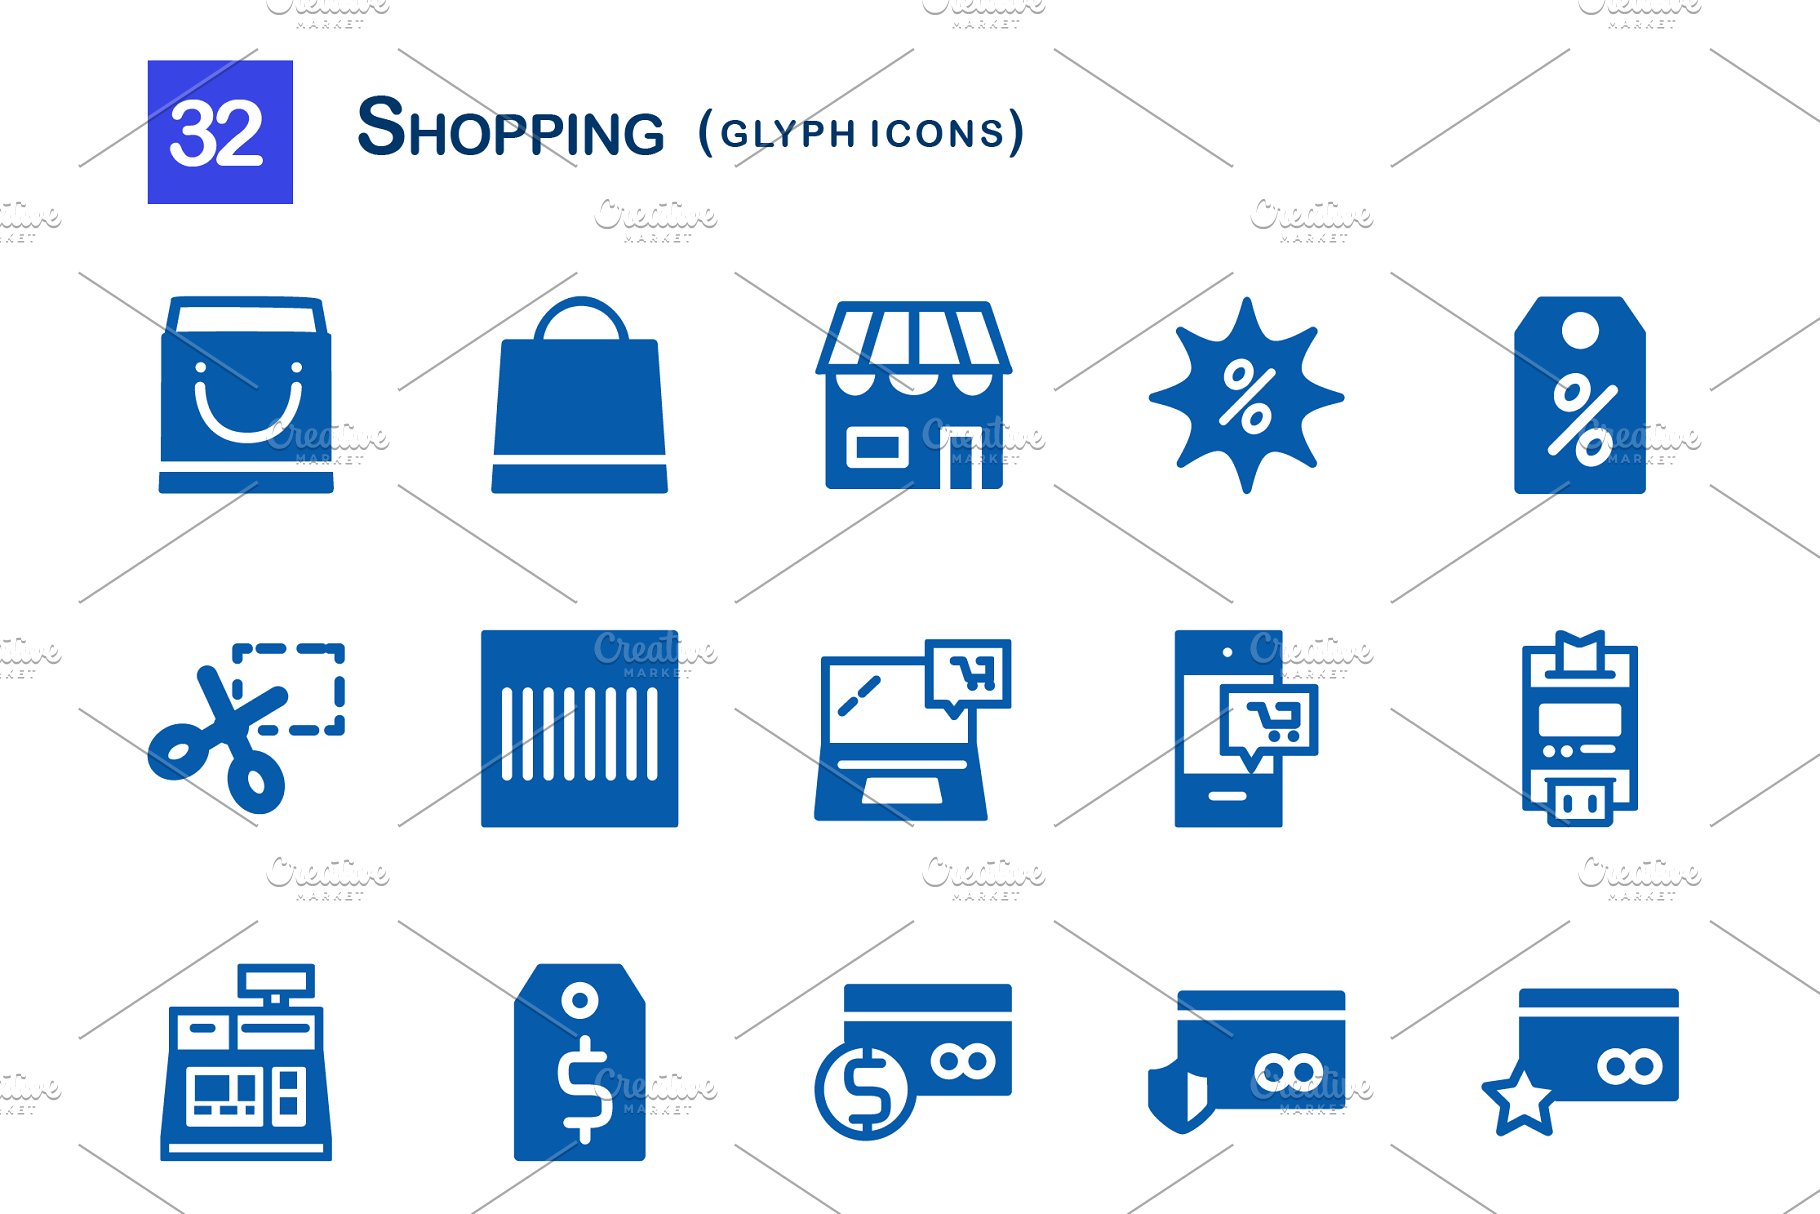 购物车图标素材 32 Shopping Glyph Icon